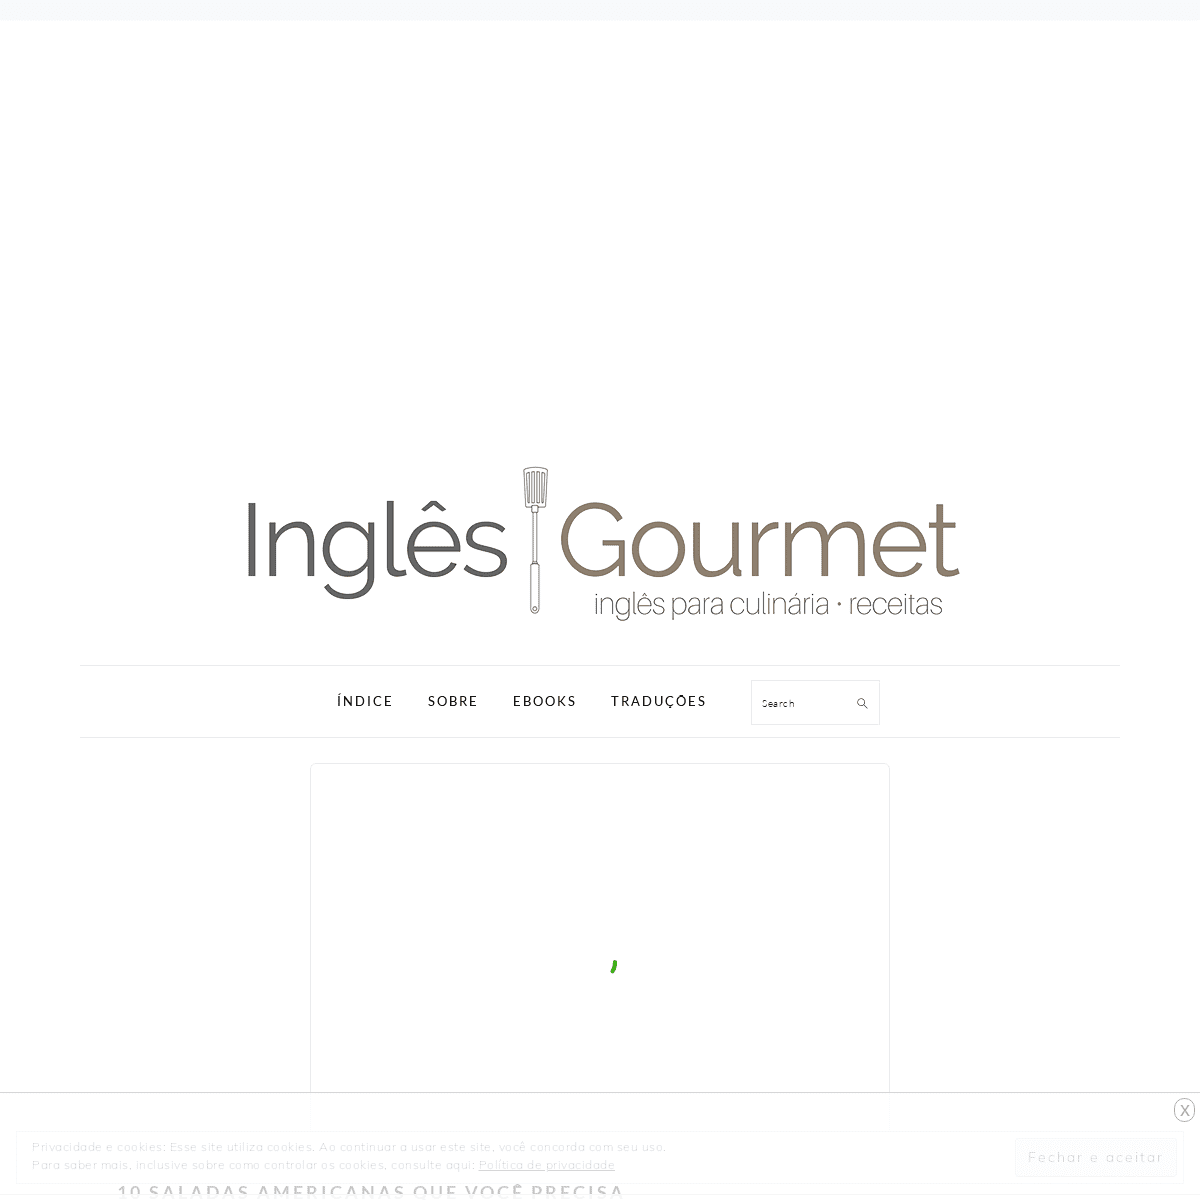 A complete backup of inglesgourmet.com